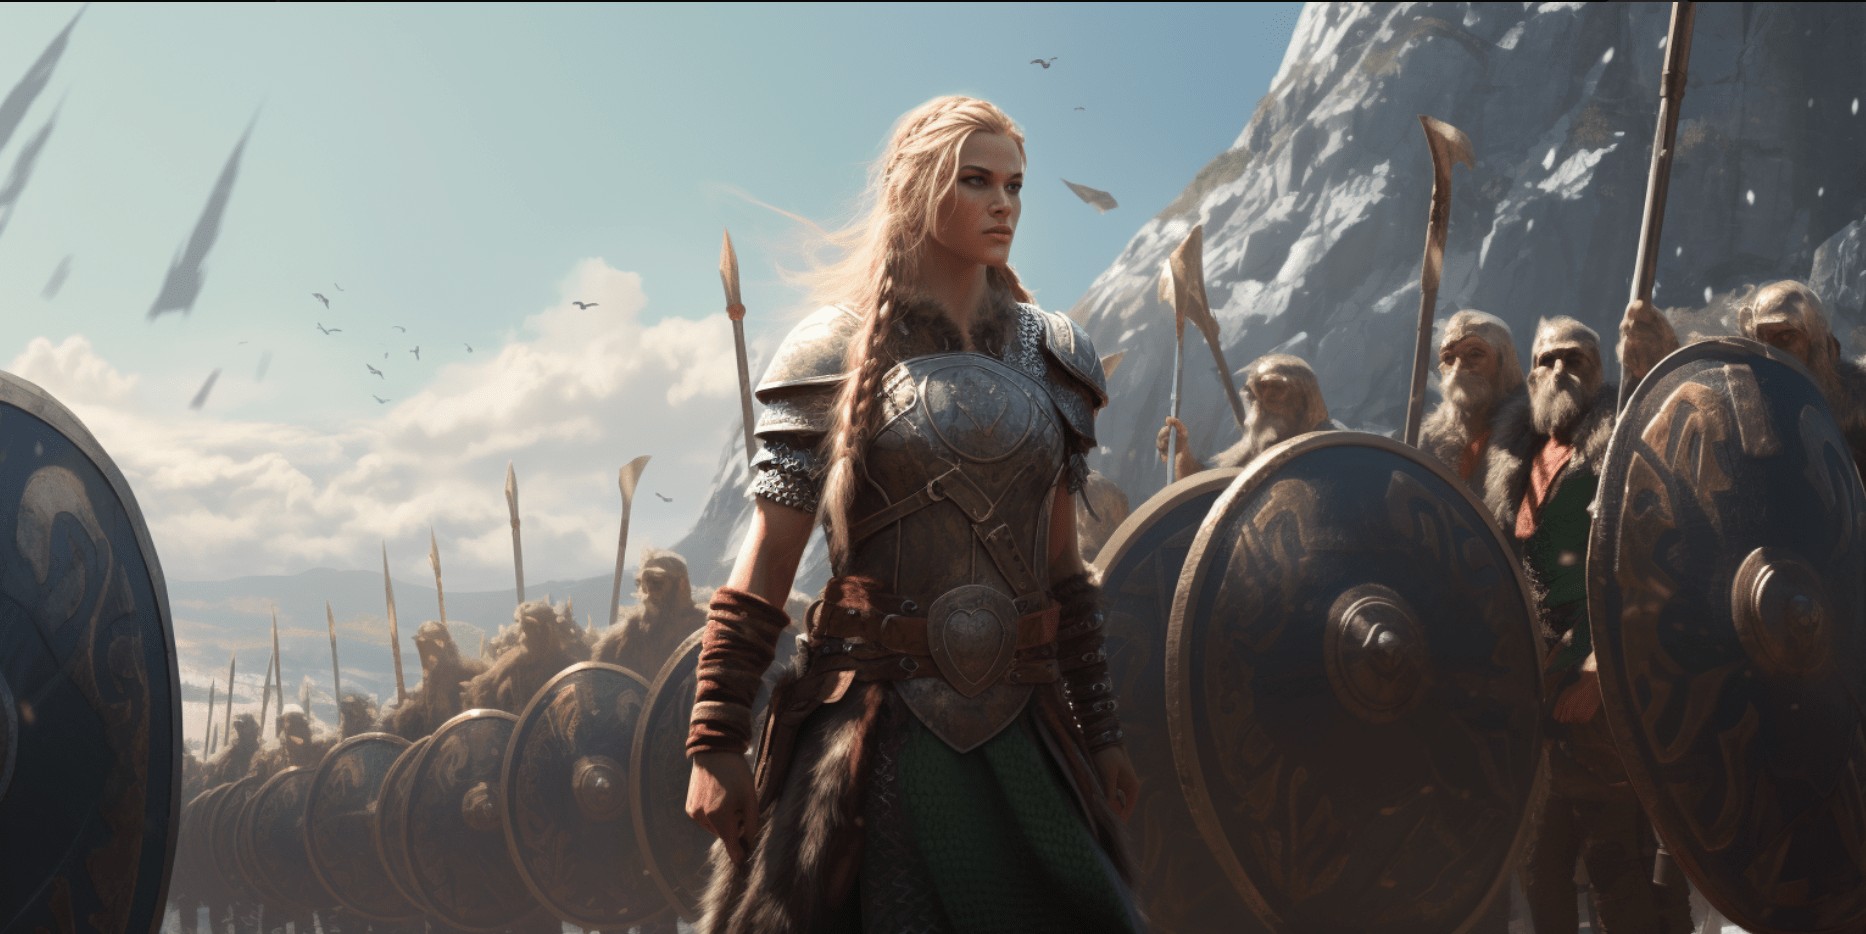 Did the Viking Shield Maiden Exist? Skjaldmaer Myth vs Reality